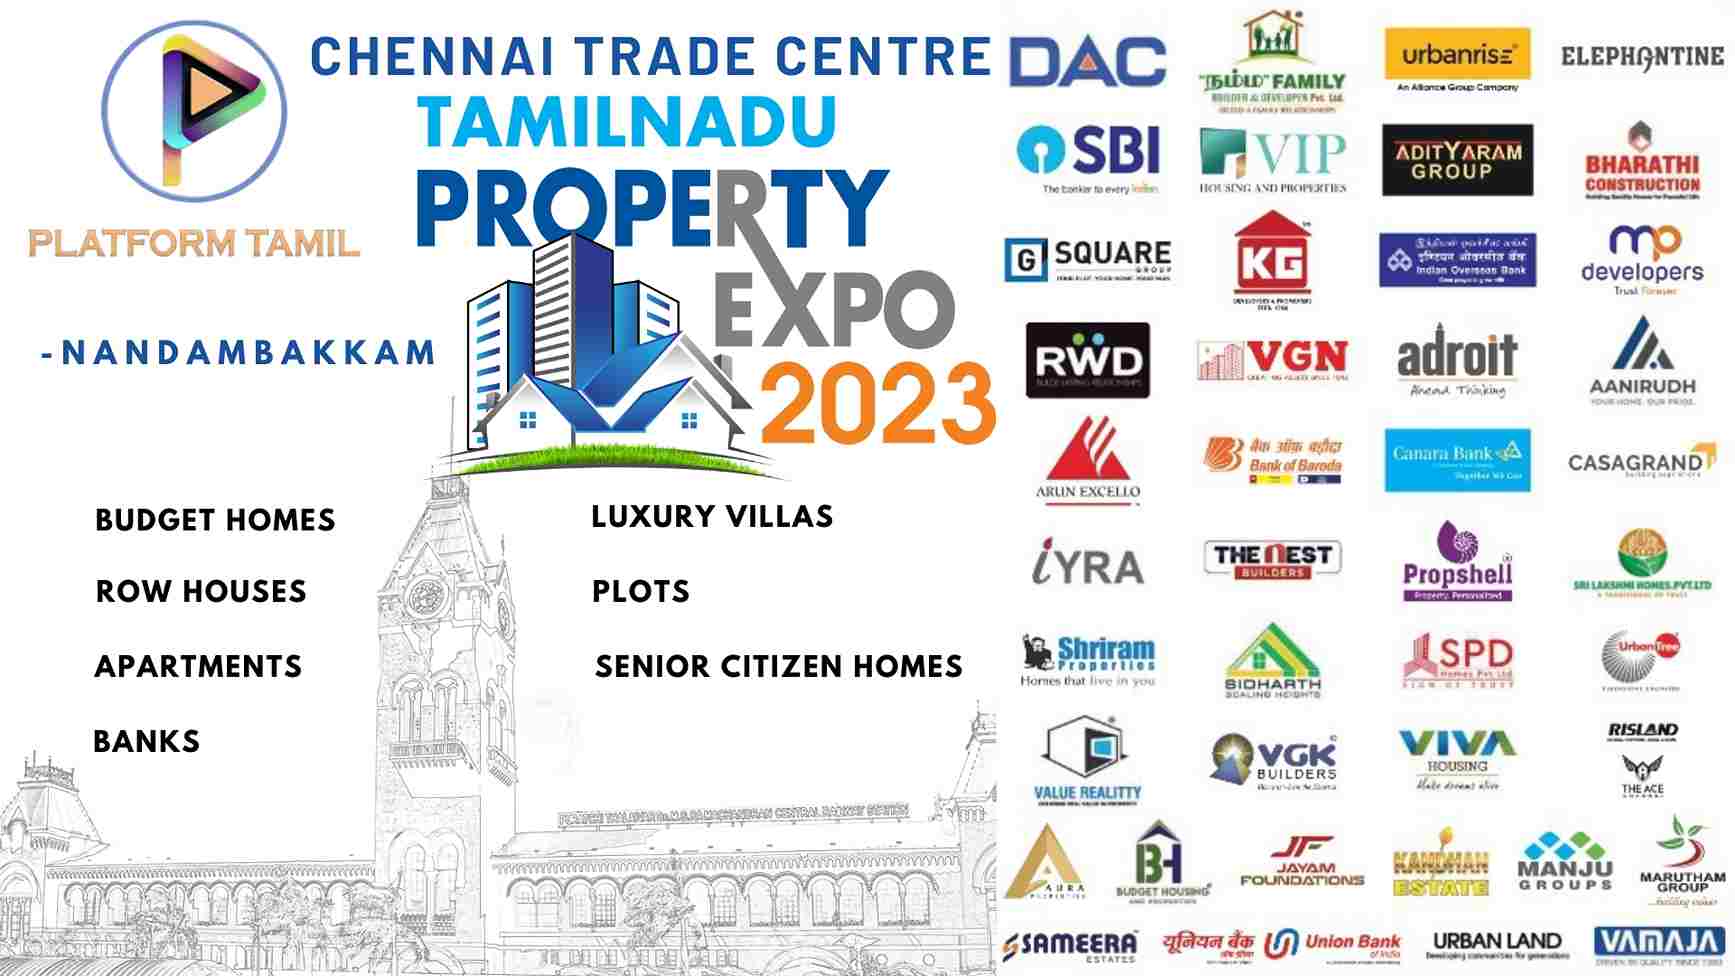 Tamil Nadu Property Expo 2023 - Platform Tamil